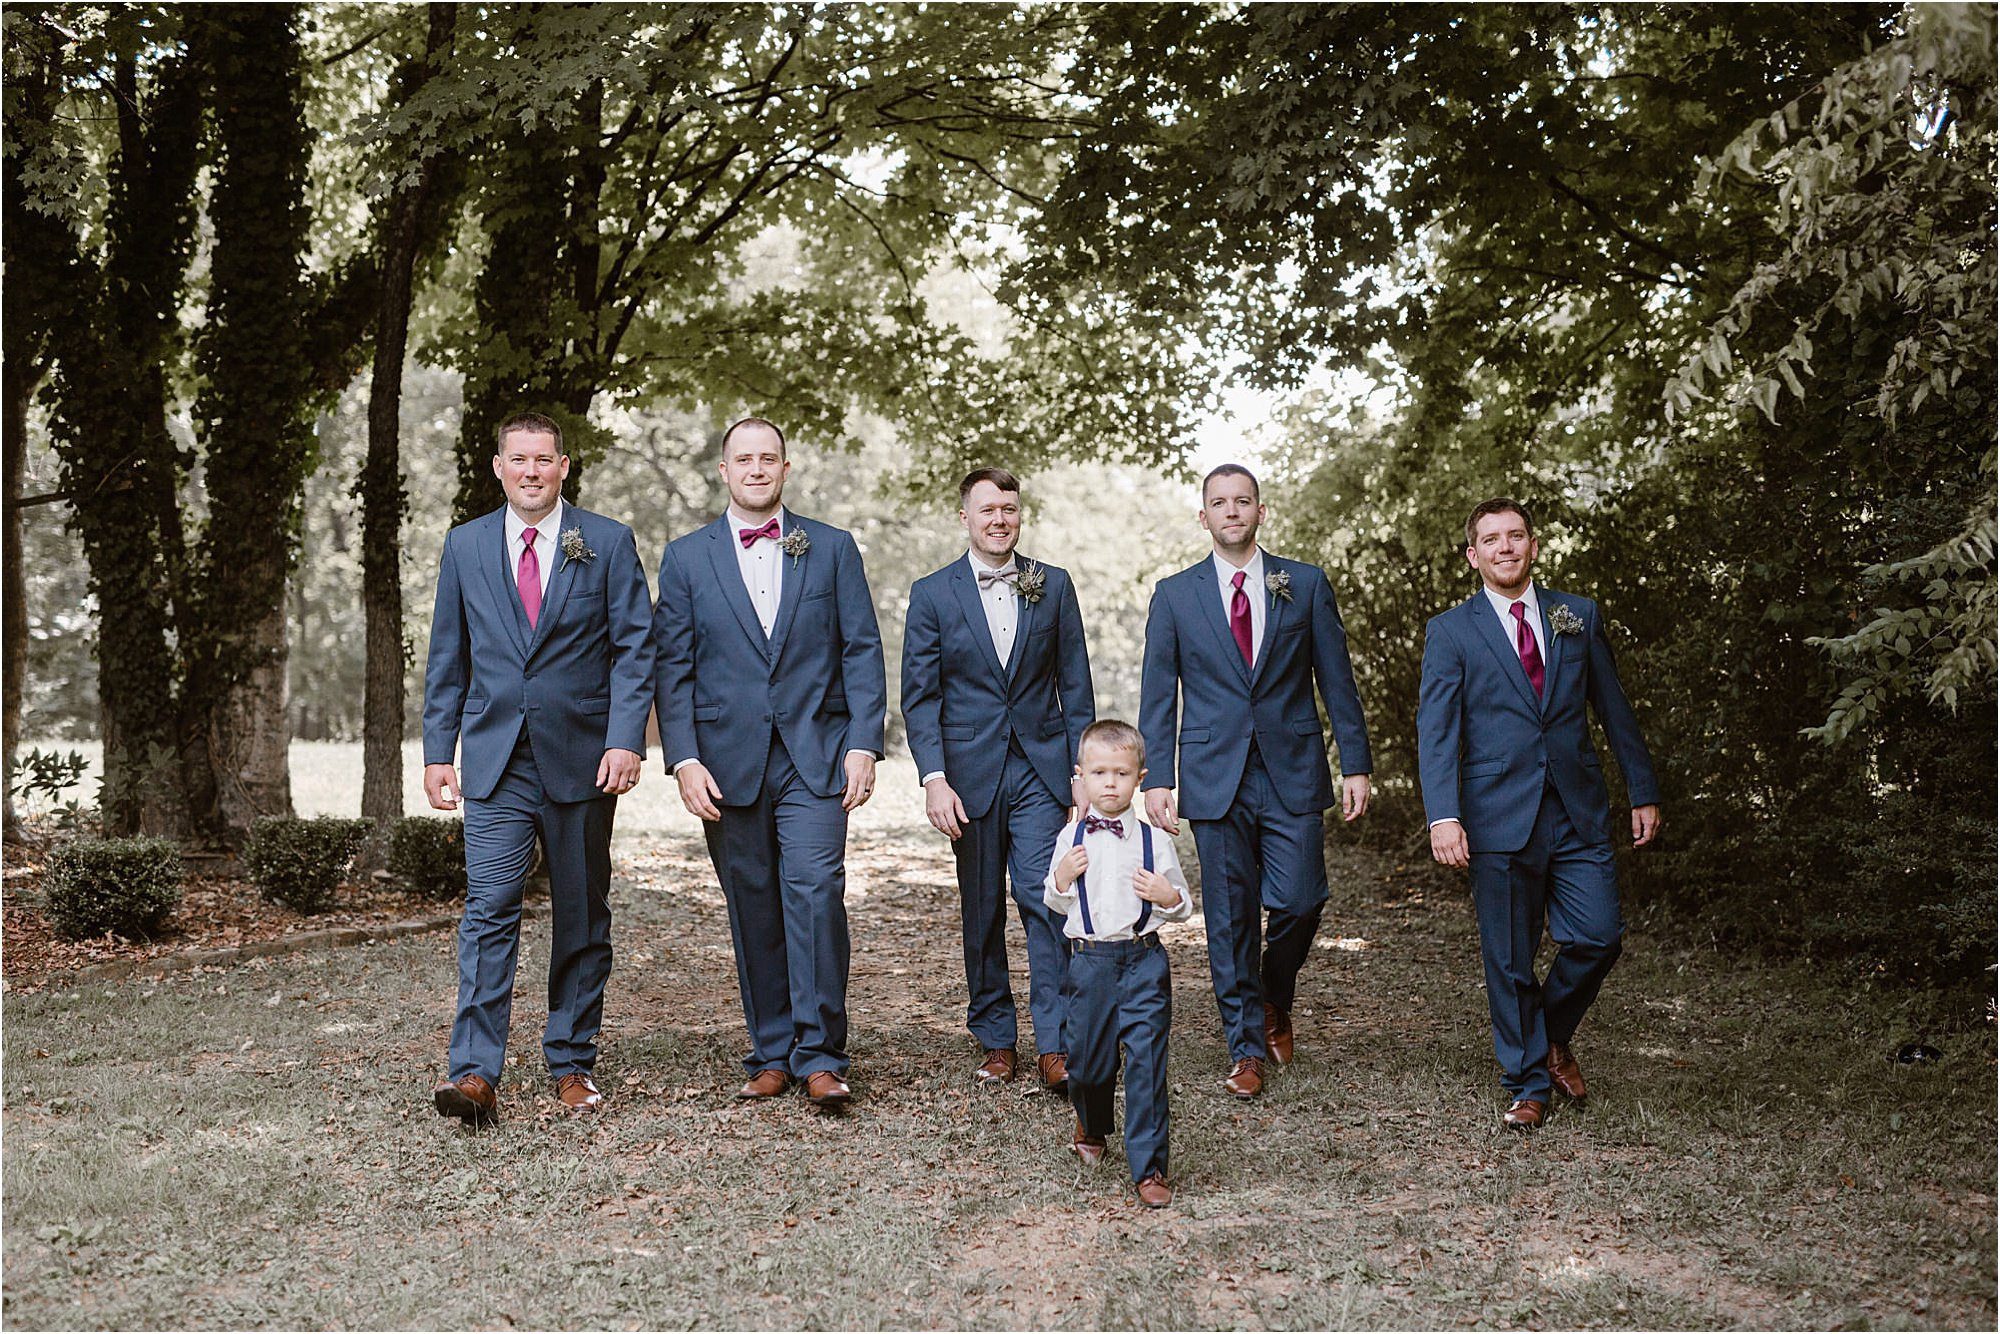 ring bearer walking with groomsmen in blue suits